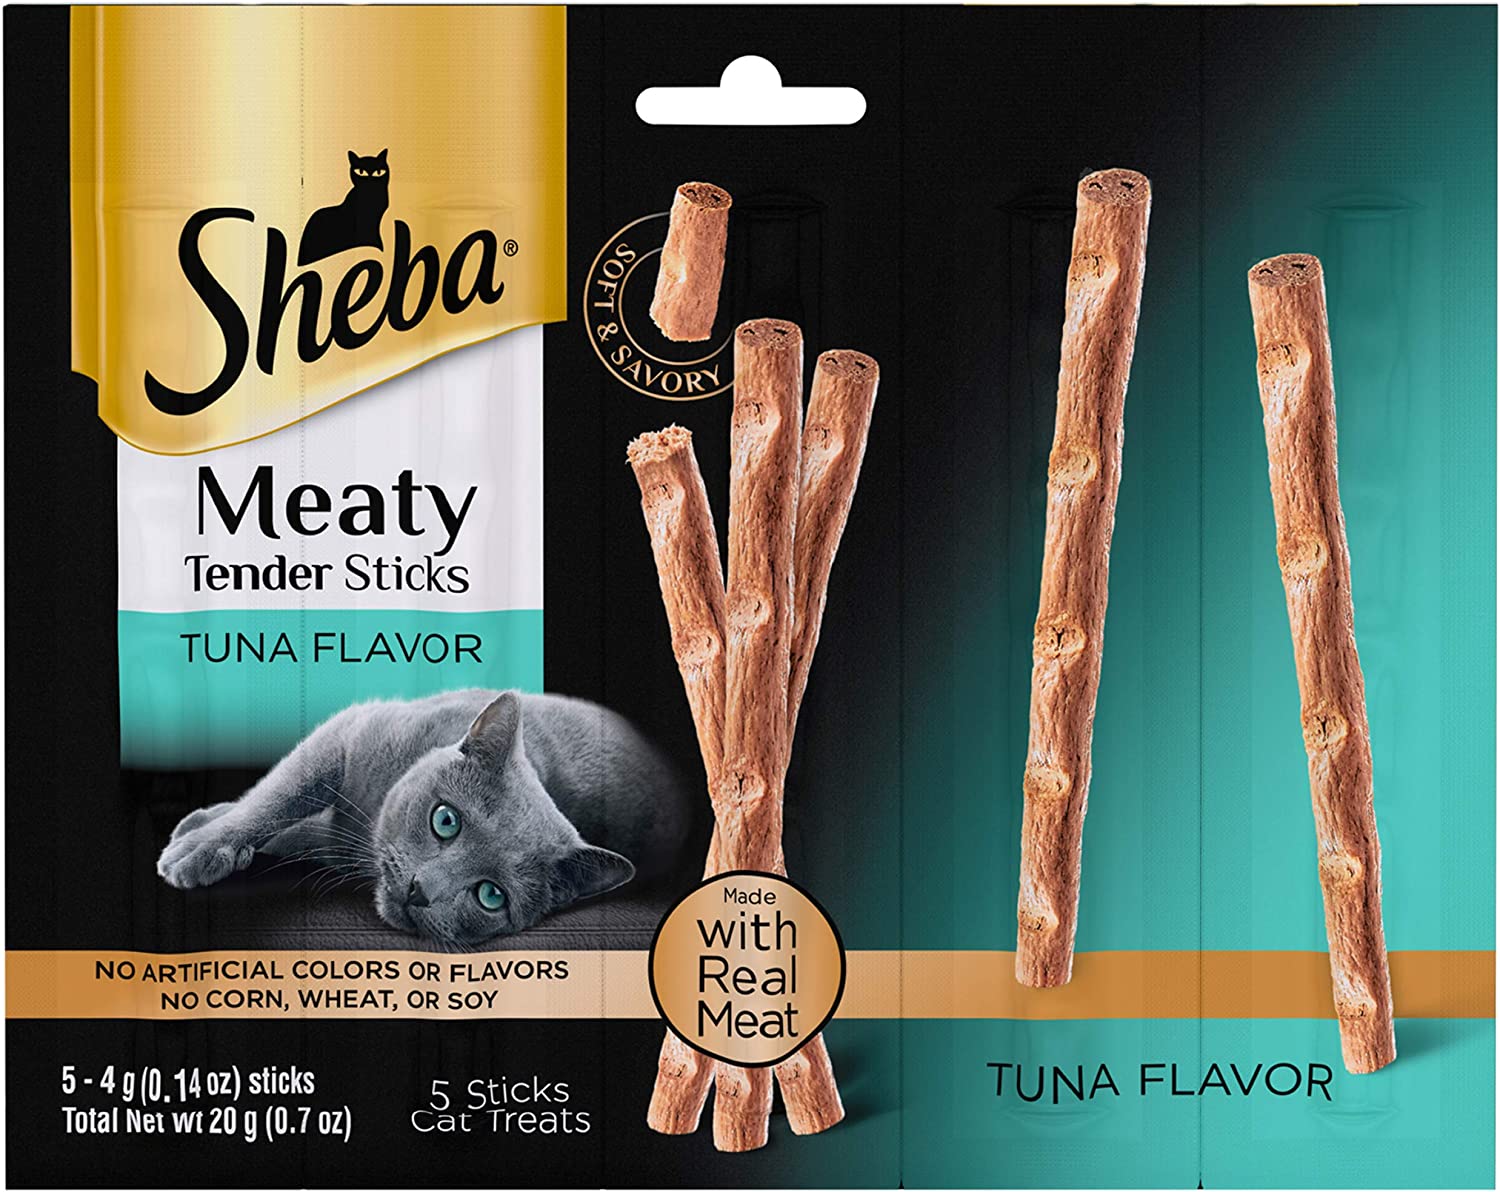 Sheba Meaty Tender Sticks Tuna Flavor 